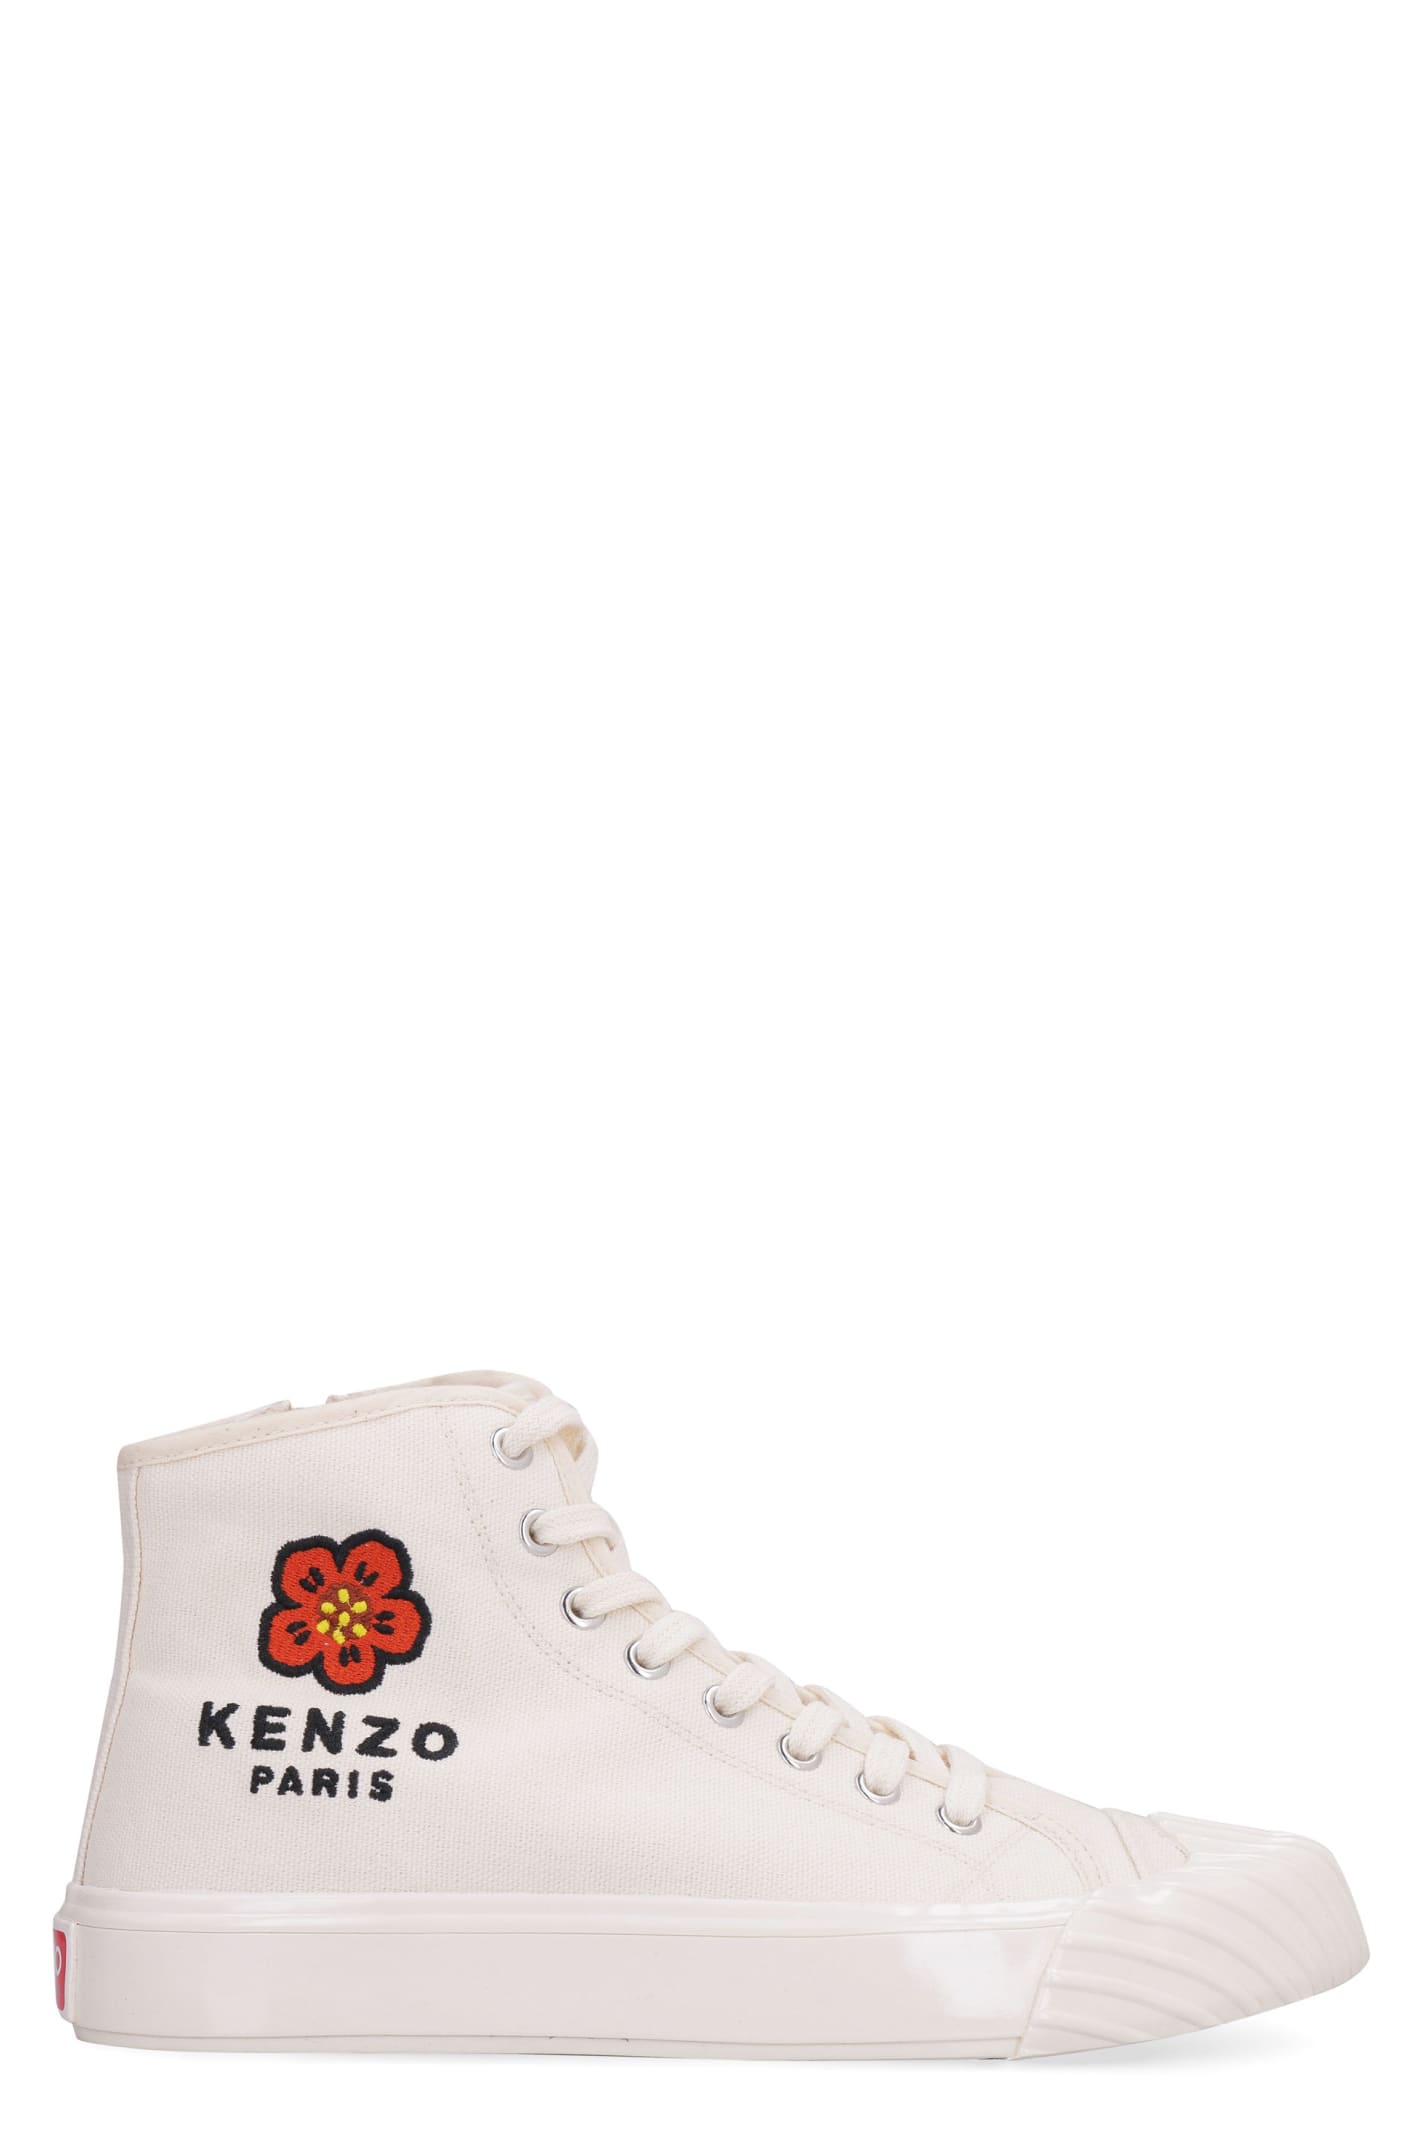 Kenzo School High-top Sneakers